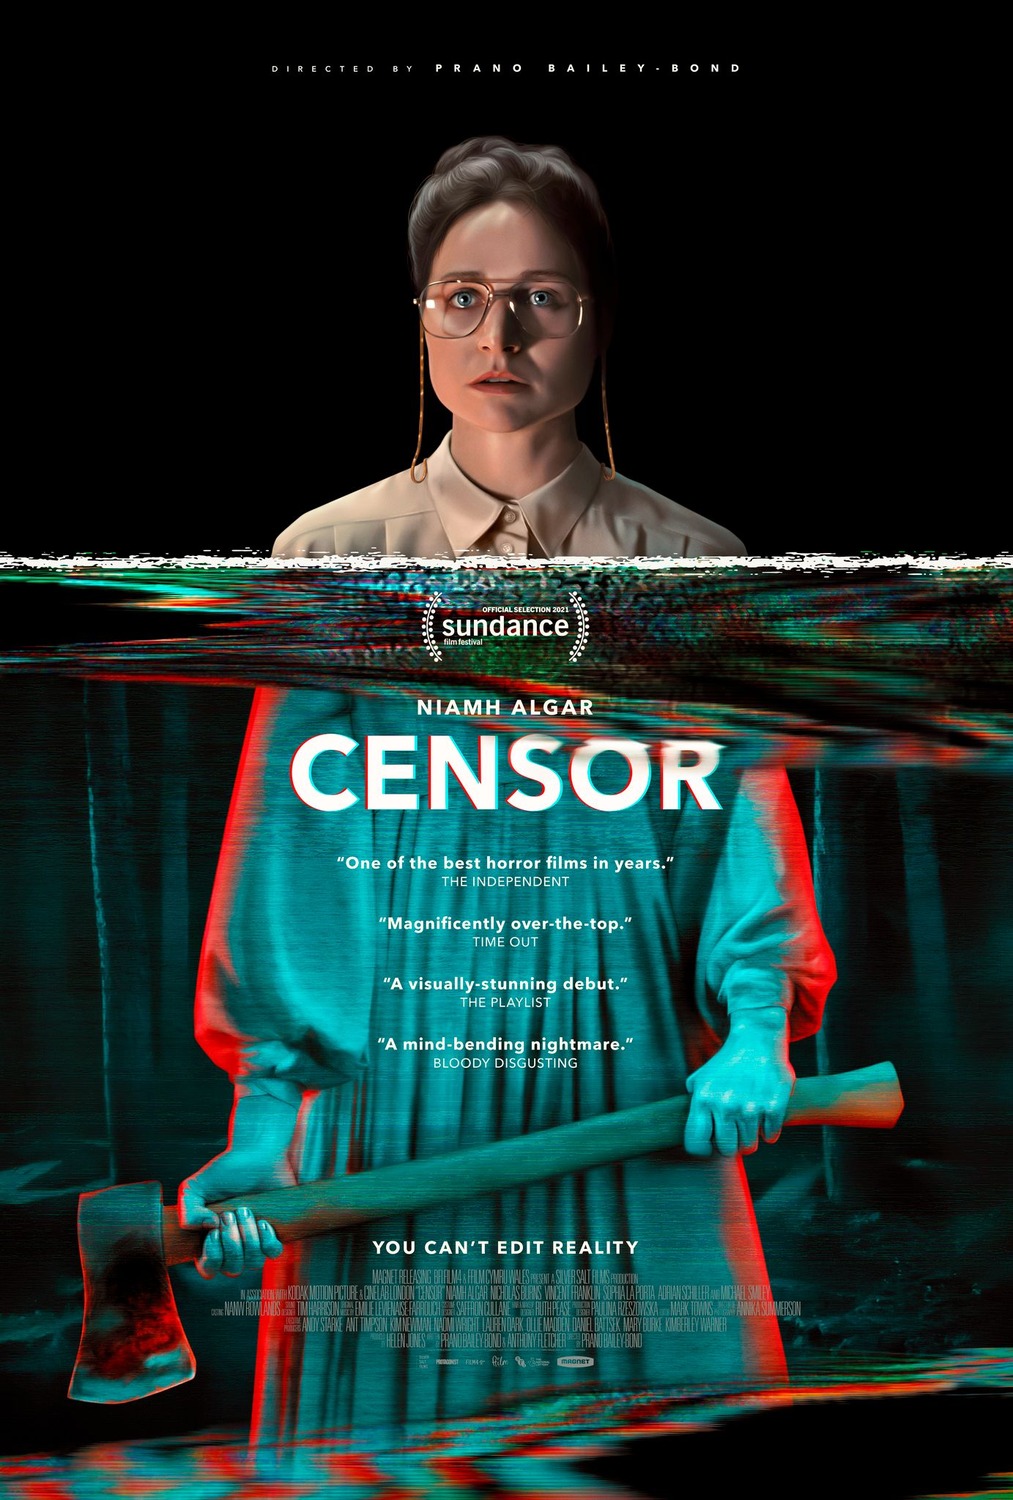 Stiahni si Filmy s titulkama  Censor (2021)[WebRip][1080p] = CSFD 49%